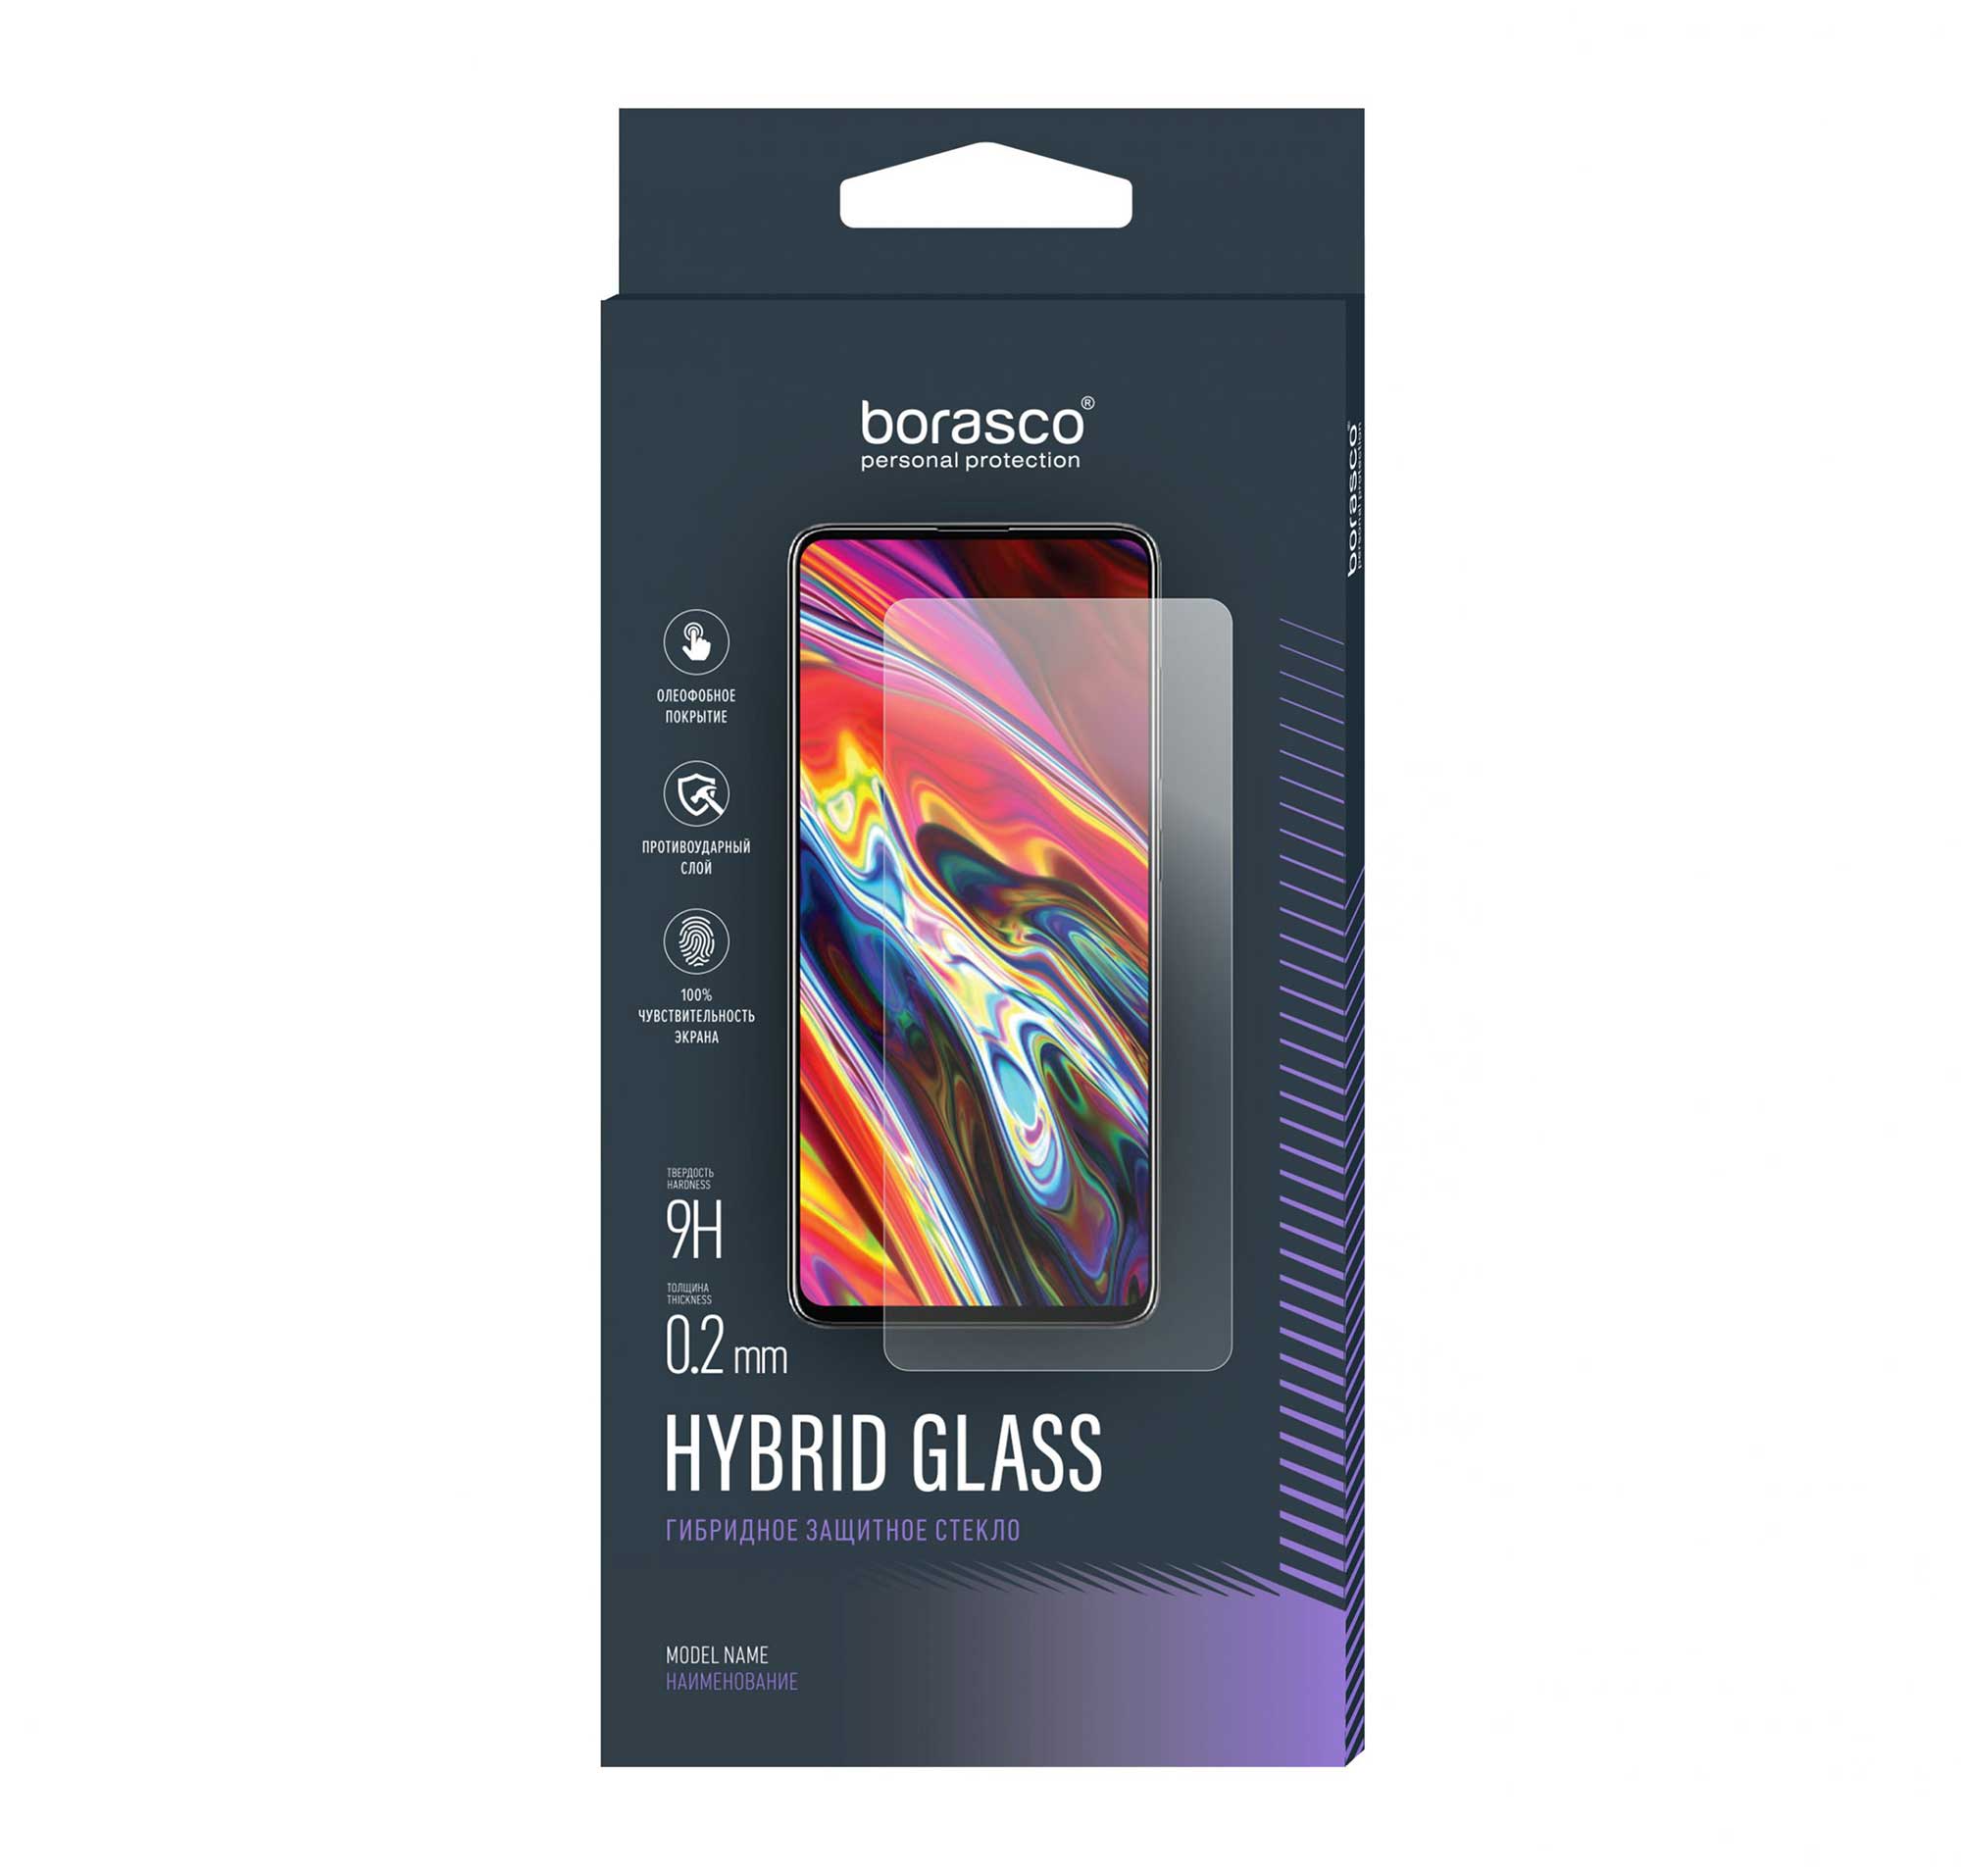 Защитное стекло Hybrid Glass для Itel Vision 1 Pro чехол mypads фк челси лондон мужской для itel s16 itel vision 1 pro задняя панель накладка бампер